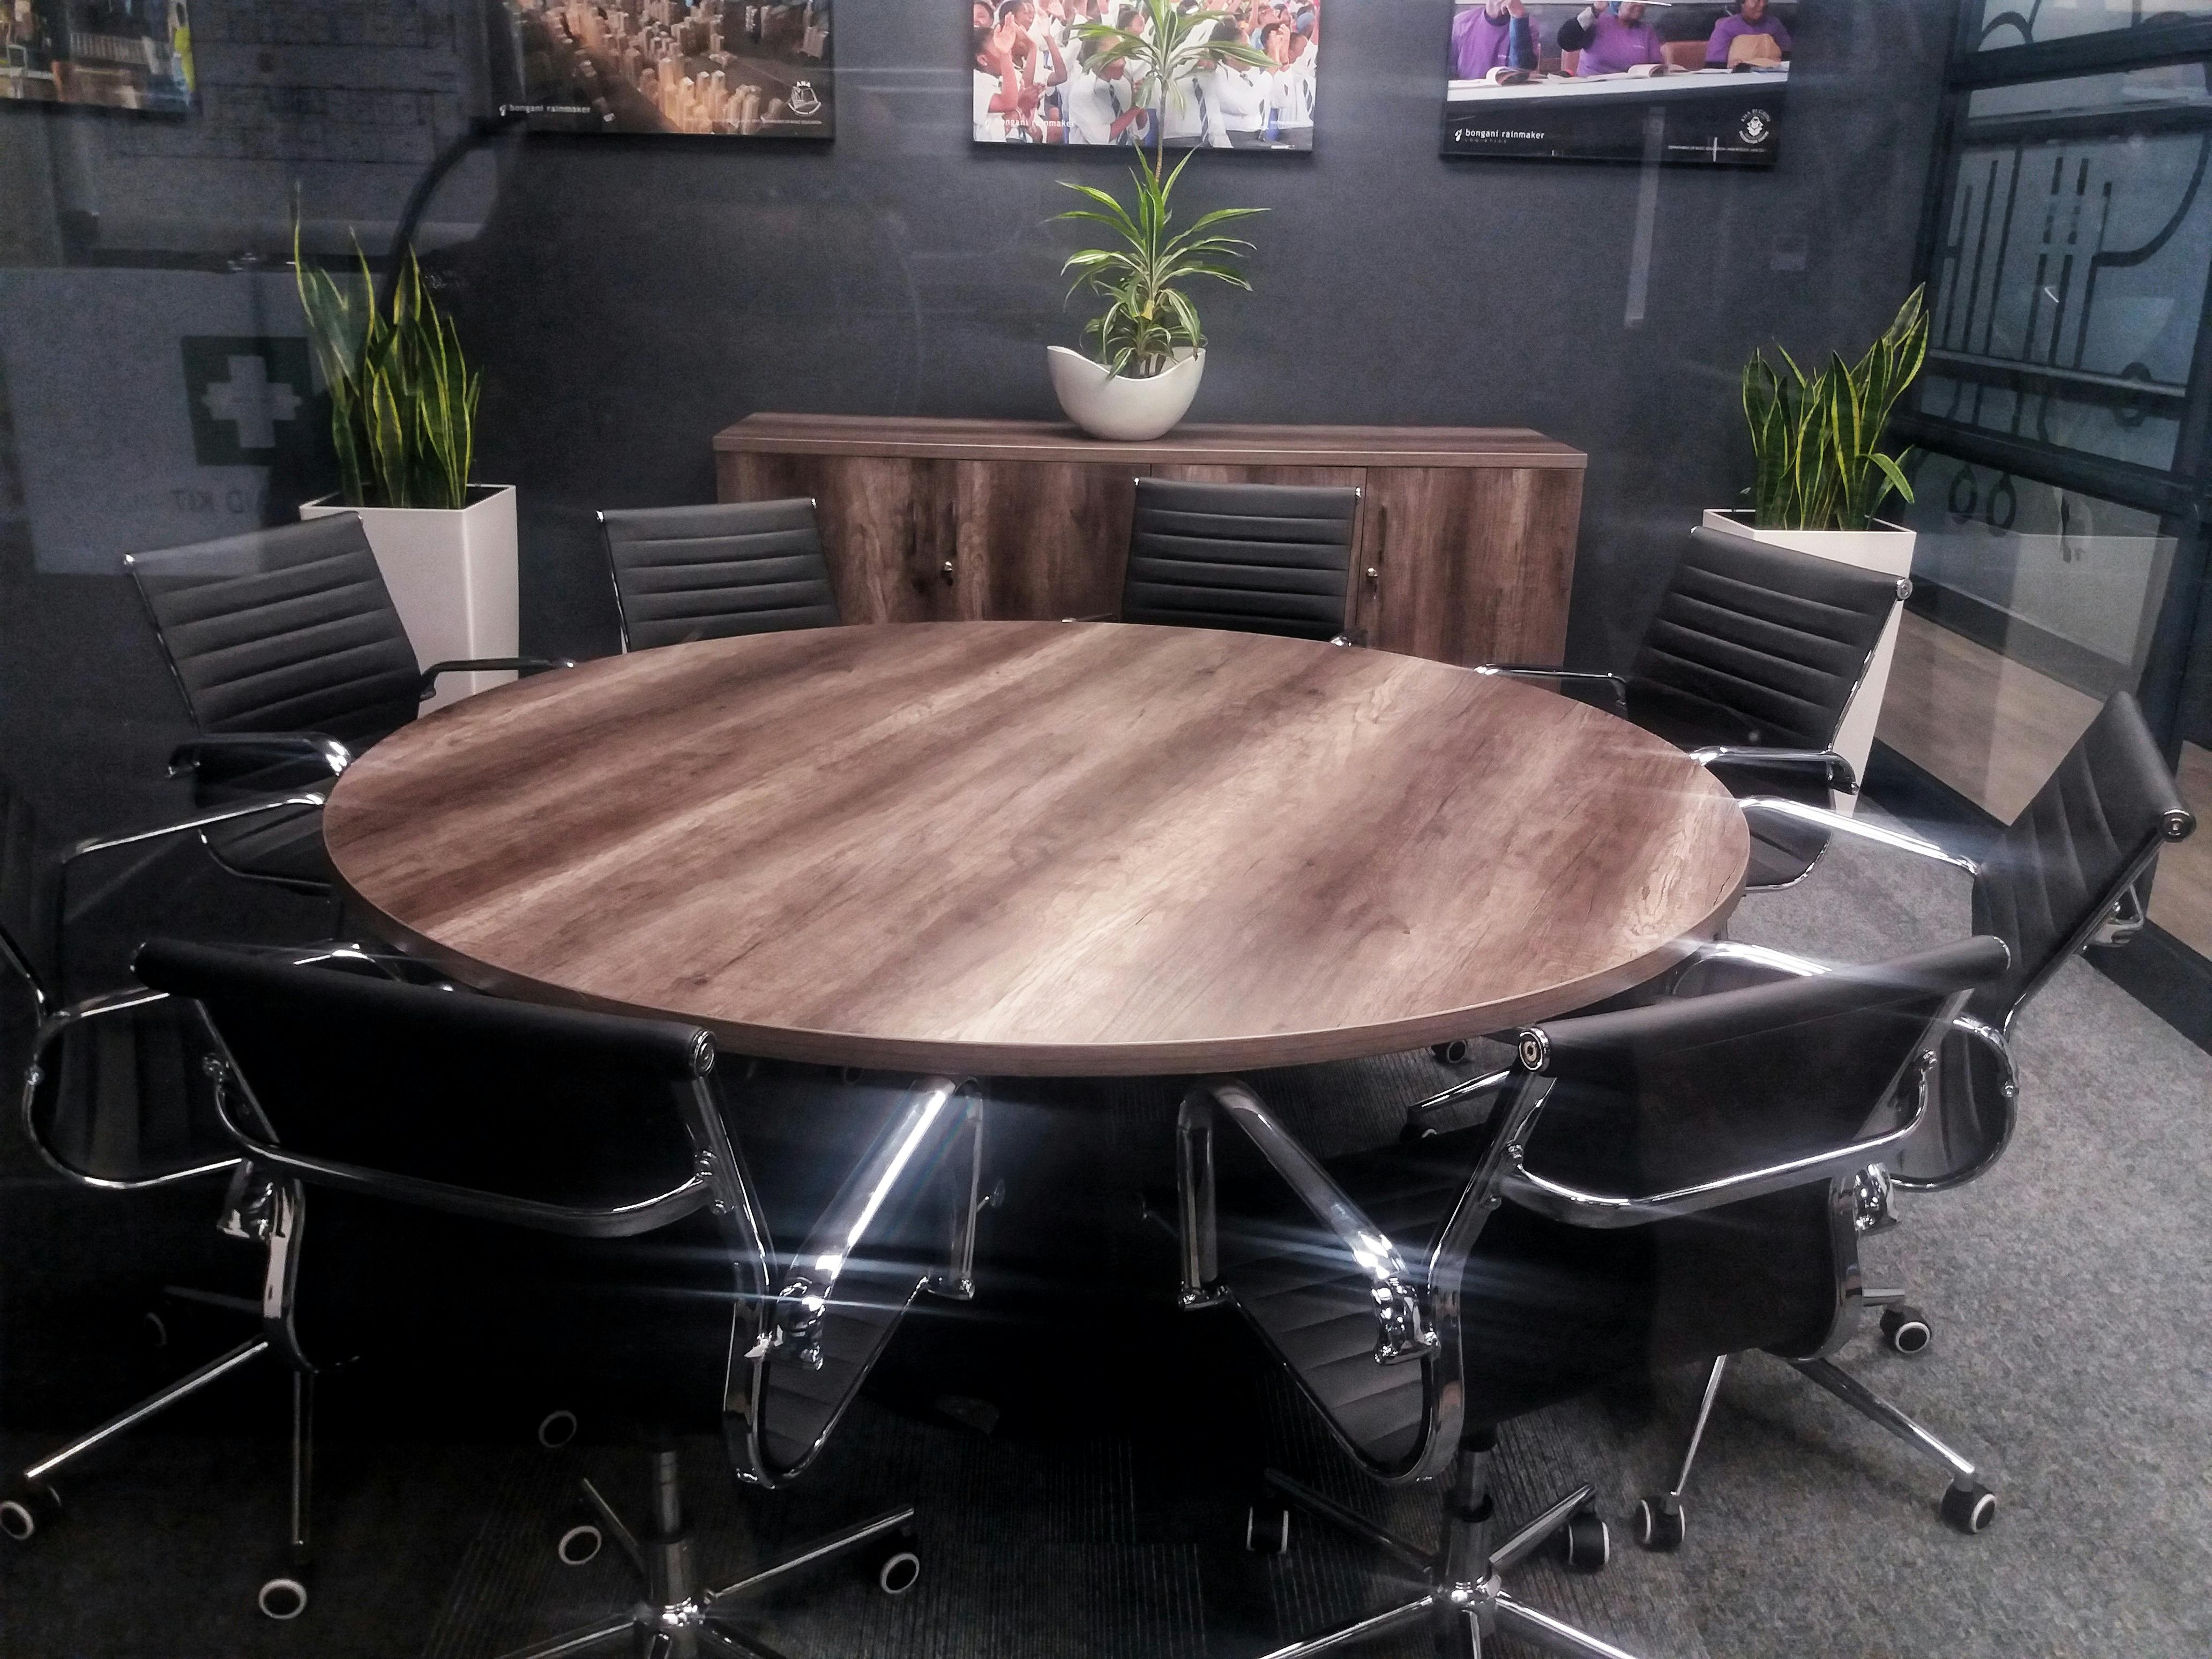 Free stock photo of billiard table, meeting room, reception